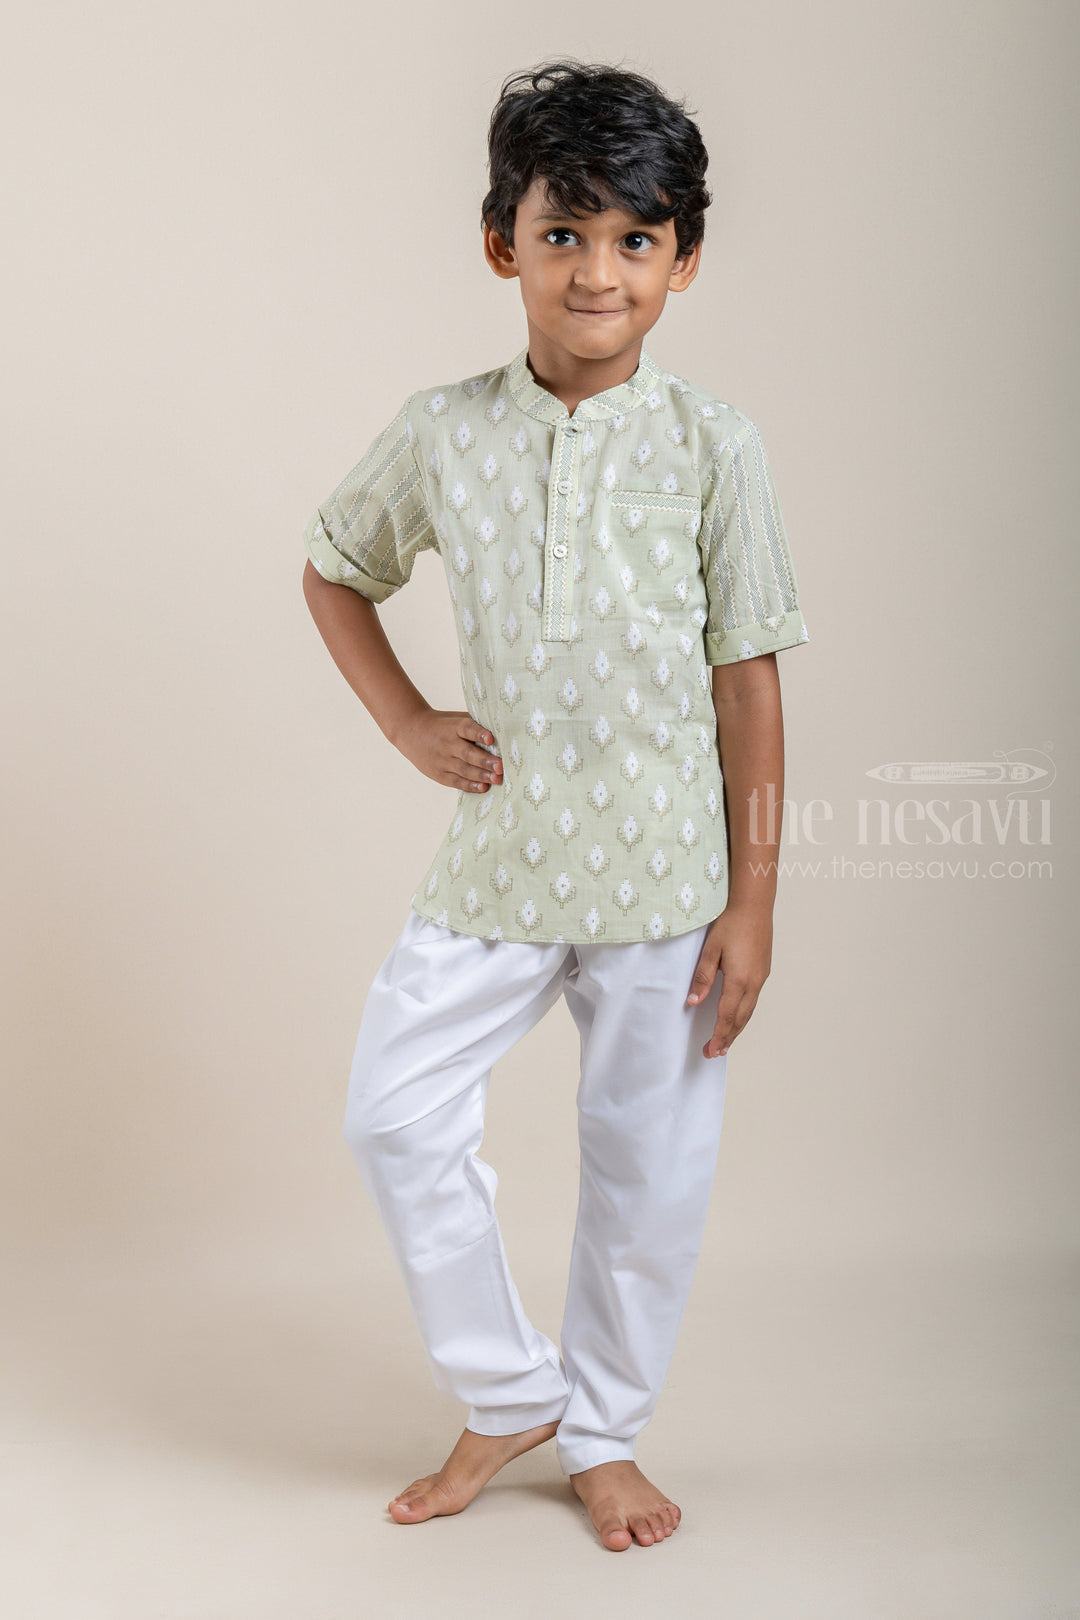 The Nesavu Boys Kurtha Shirt Adorable Butta Printed Olive Green Cotton Shirt For Boys Nesavu 12 (3M) / Green / Cotton BS018B Latest Printed Cotton Shirts For Boys | Ethnic Shirt | The Nesavu